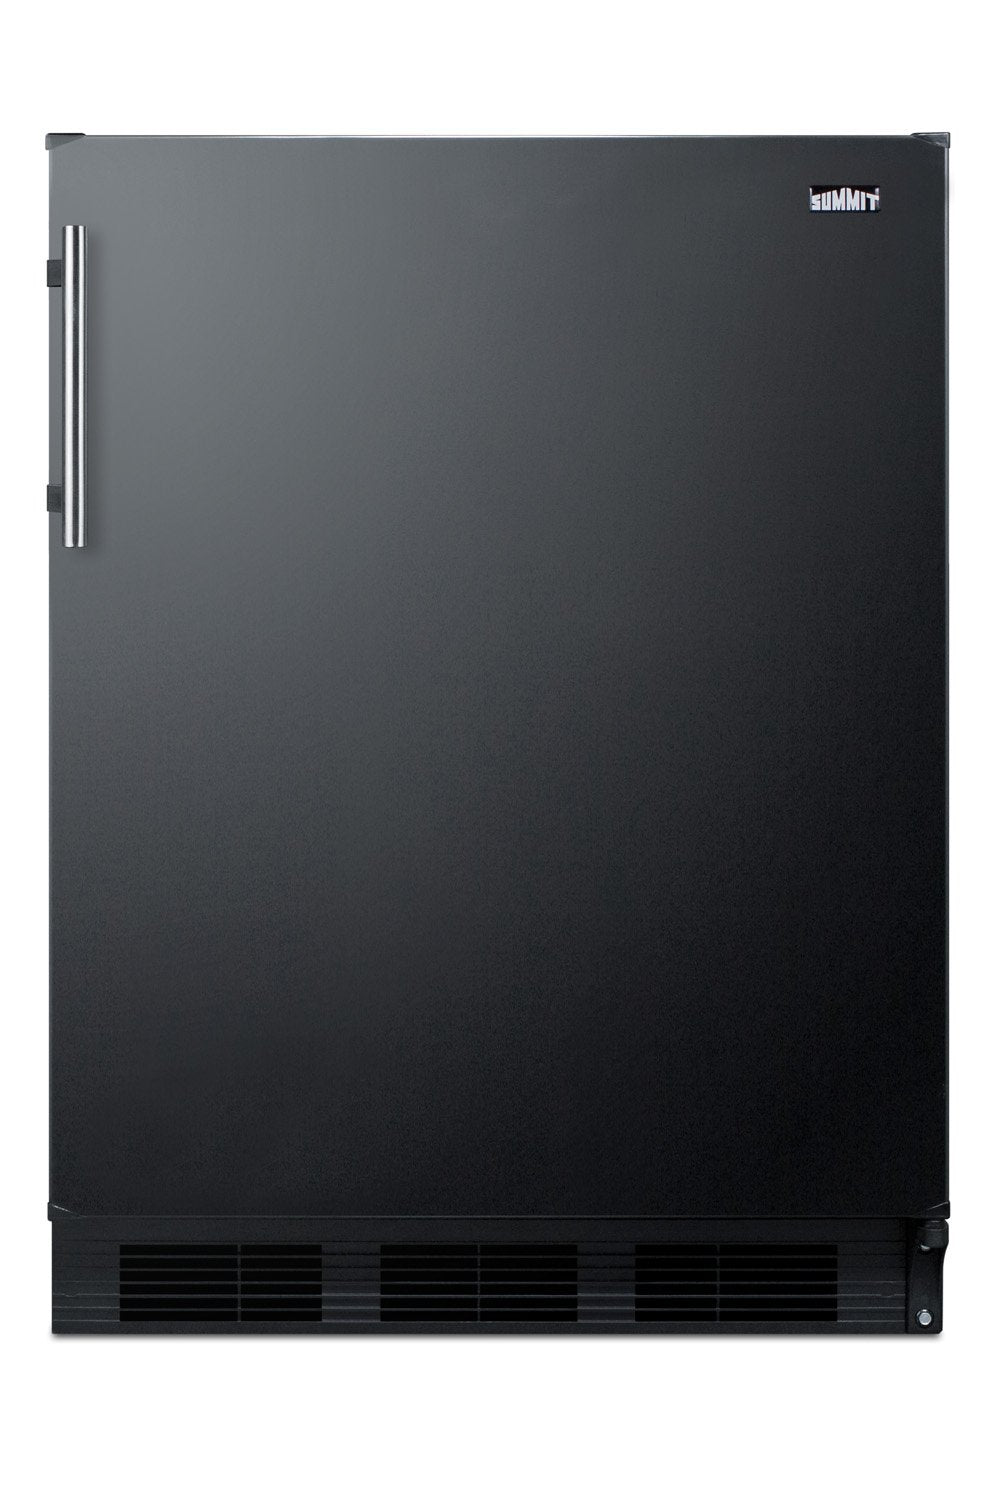 SUMMIT 24" Wide All-Refrigerator